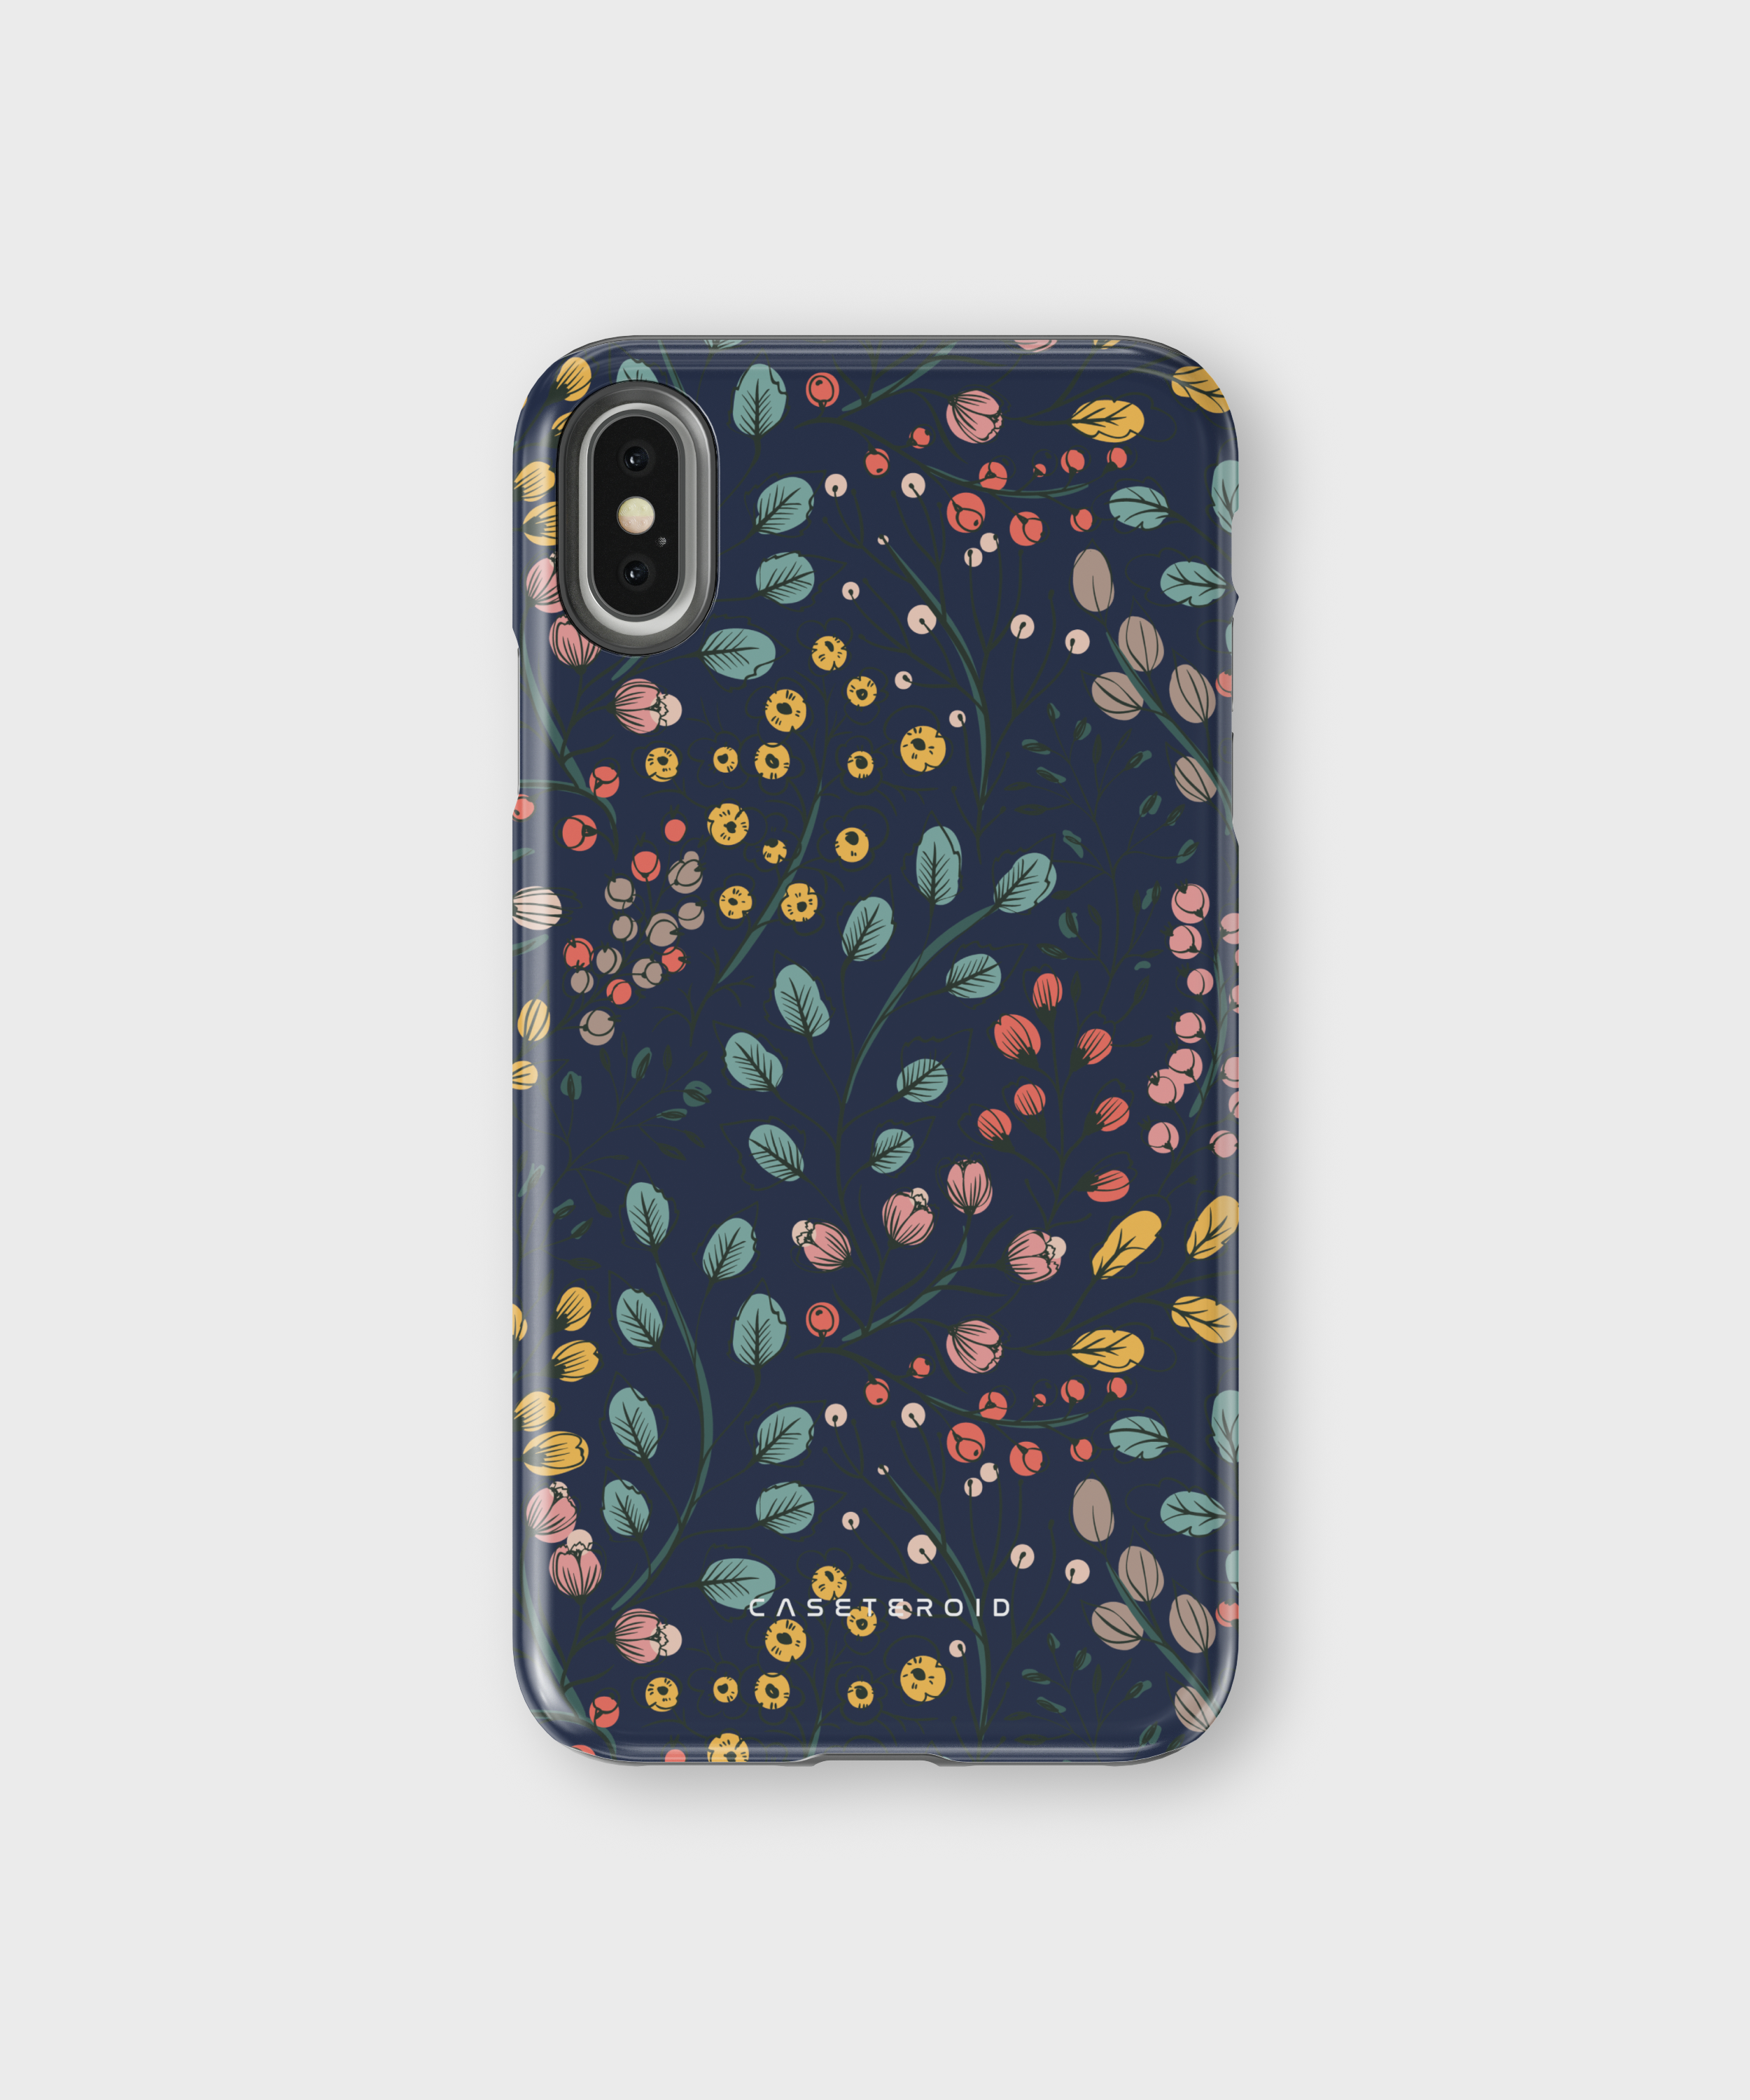 iPhone Tough Case - Botanical Kaleidoscope - CASETEROID